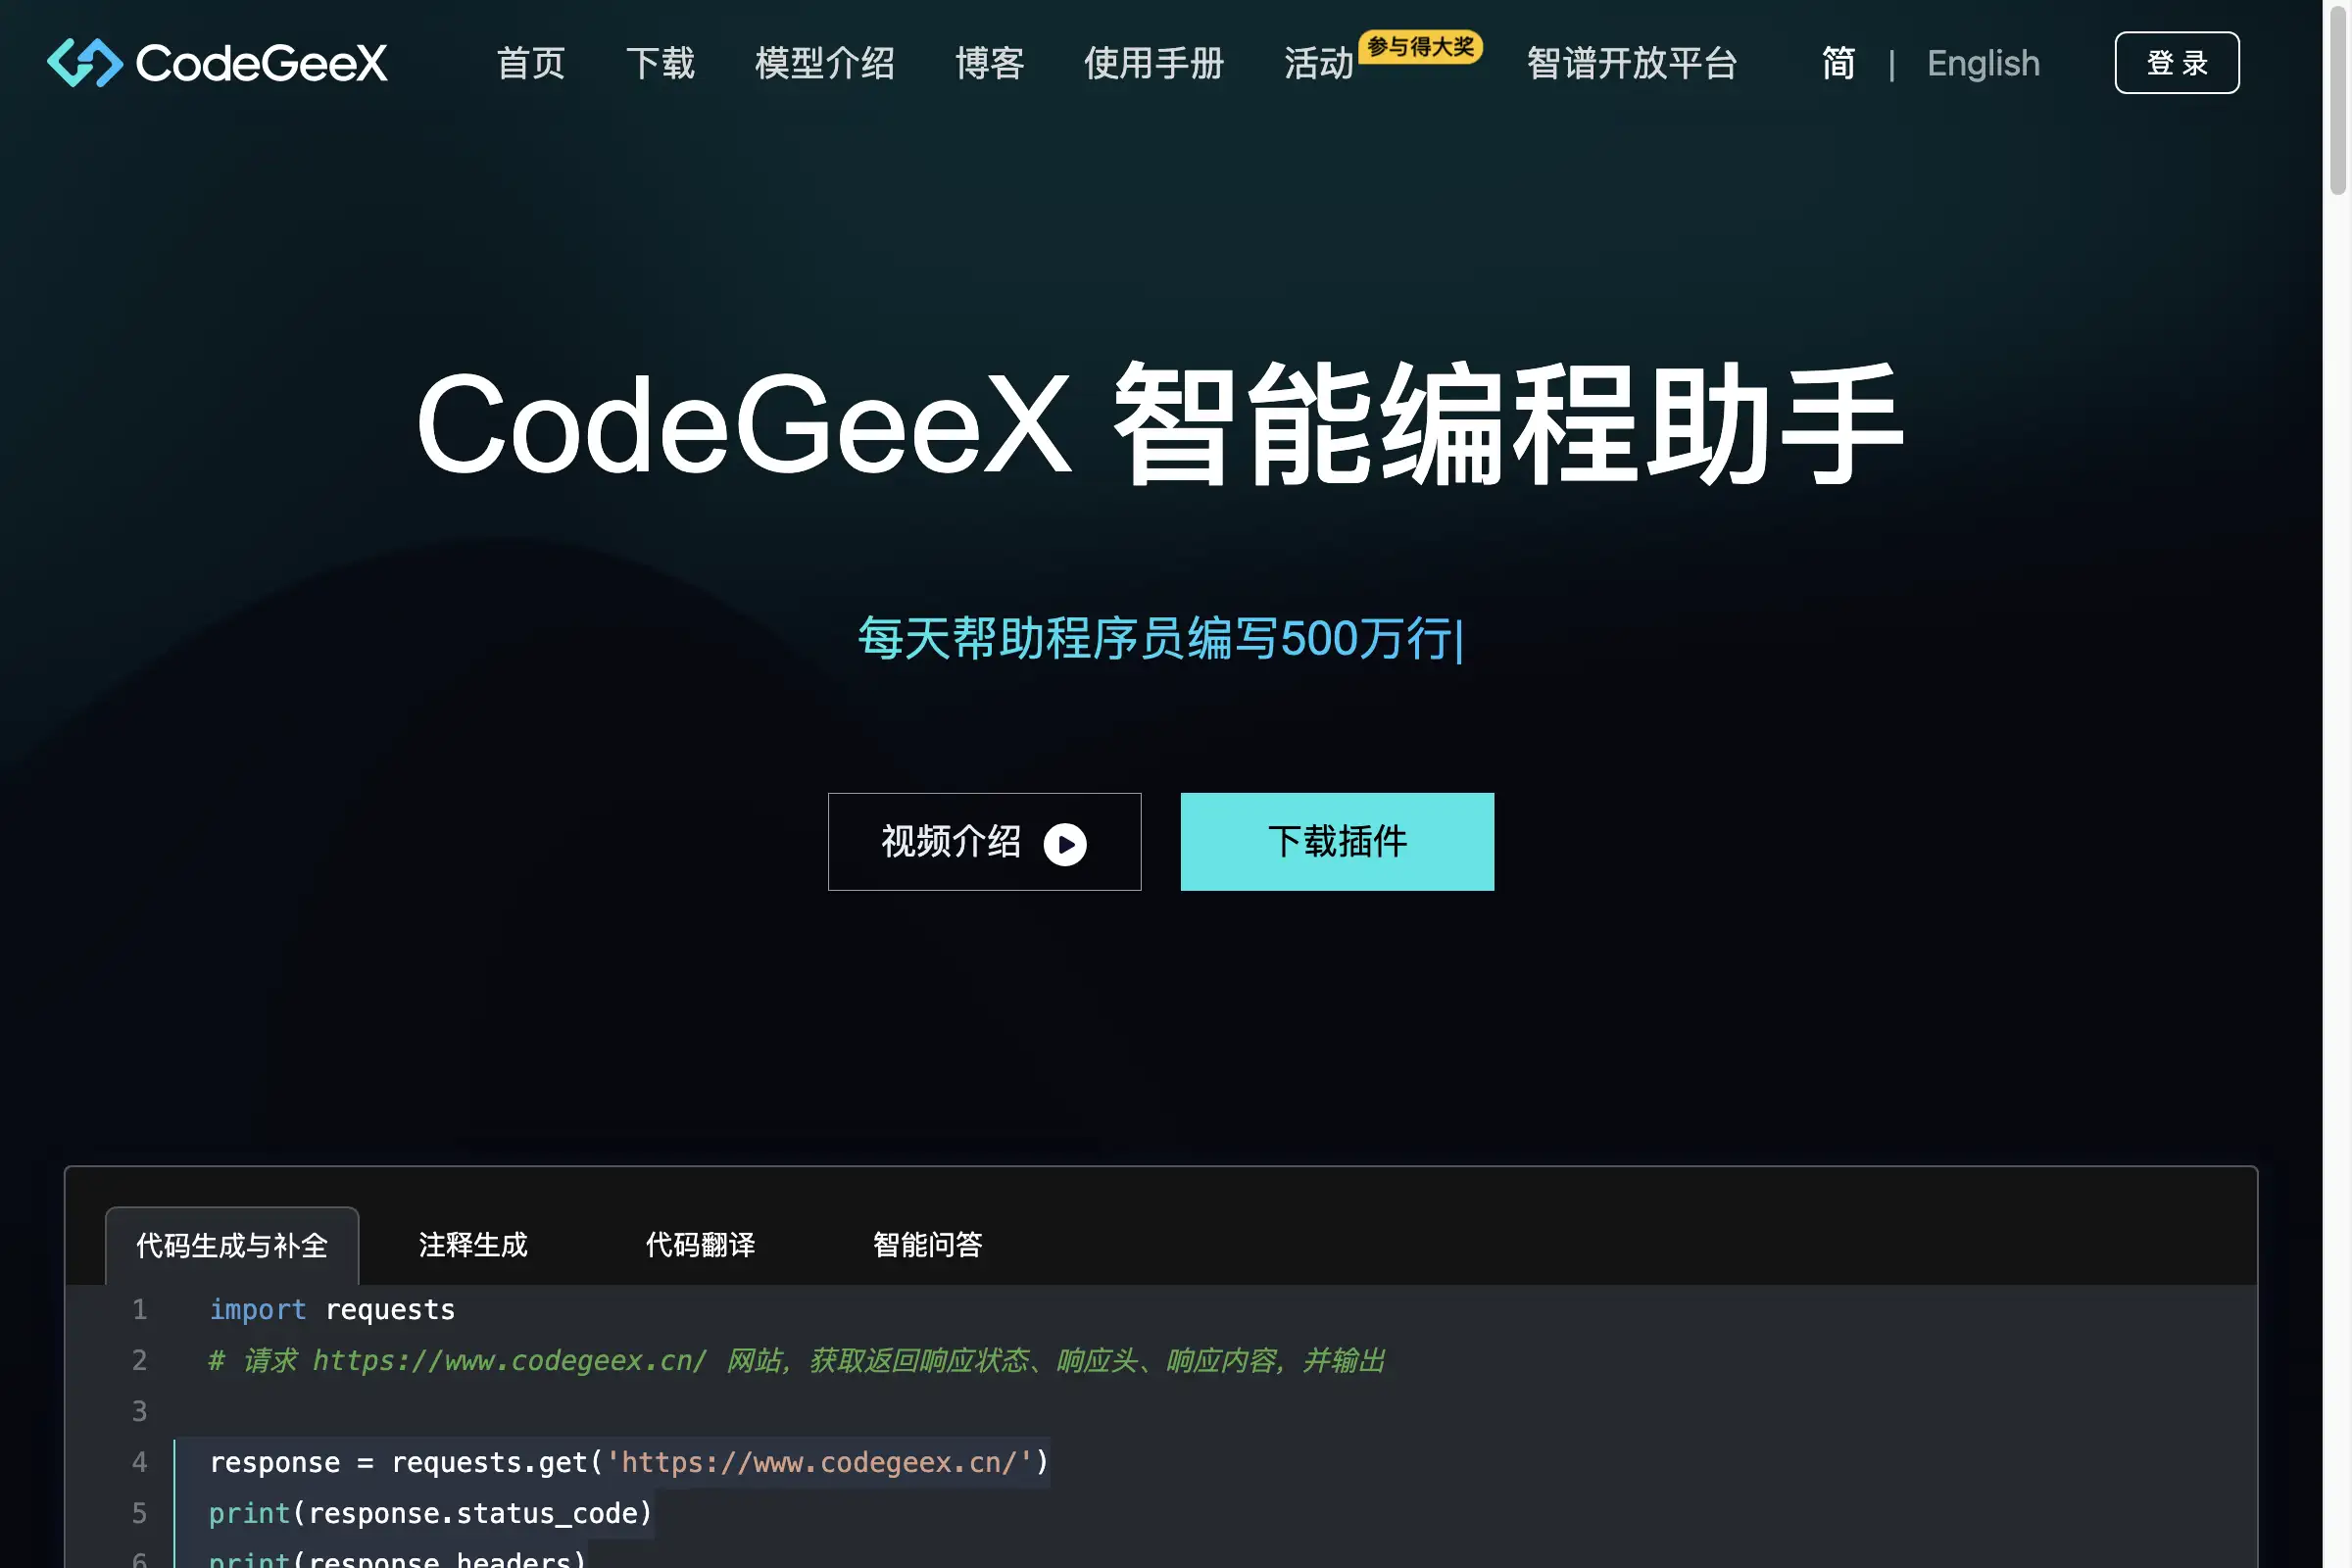 CodeGeeX - A Multilingual Code Generation Tool